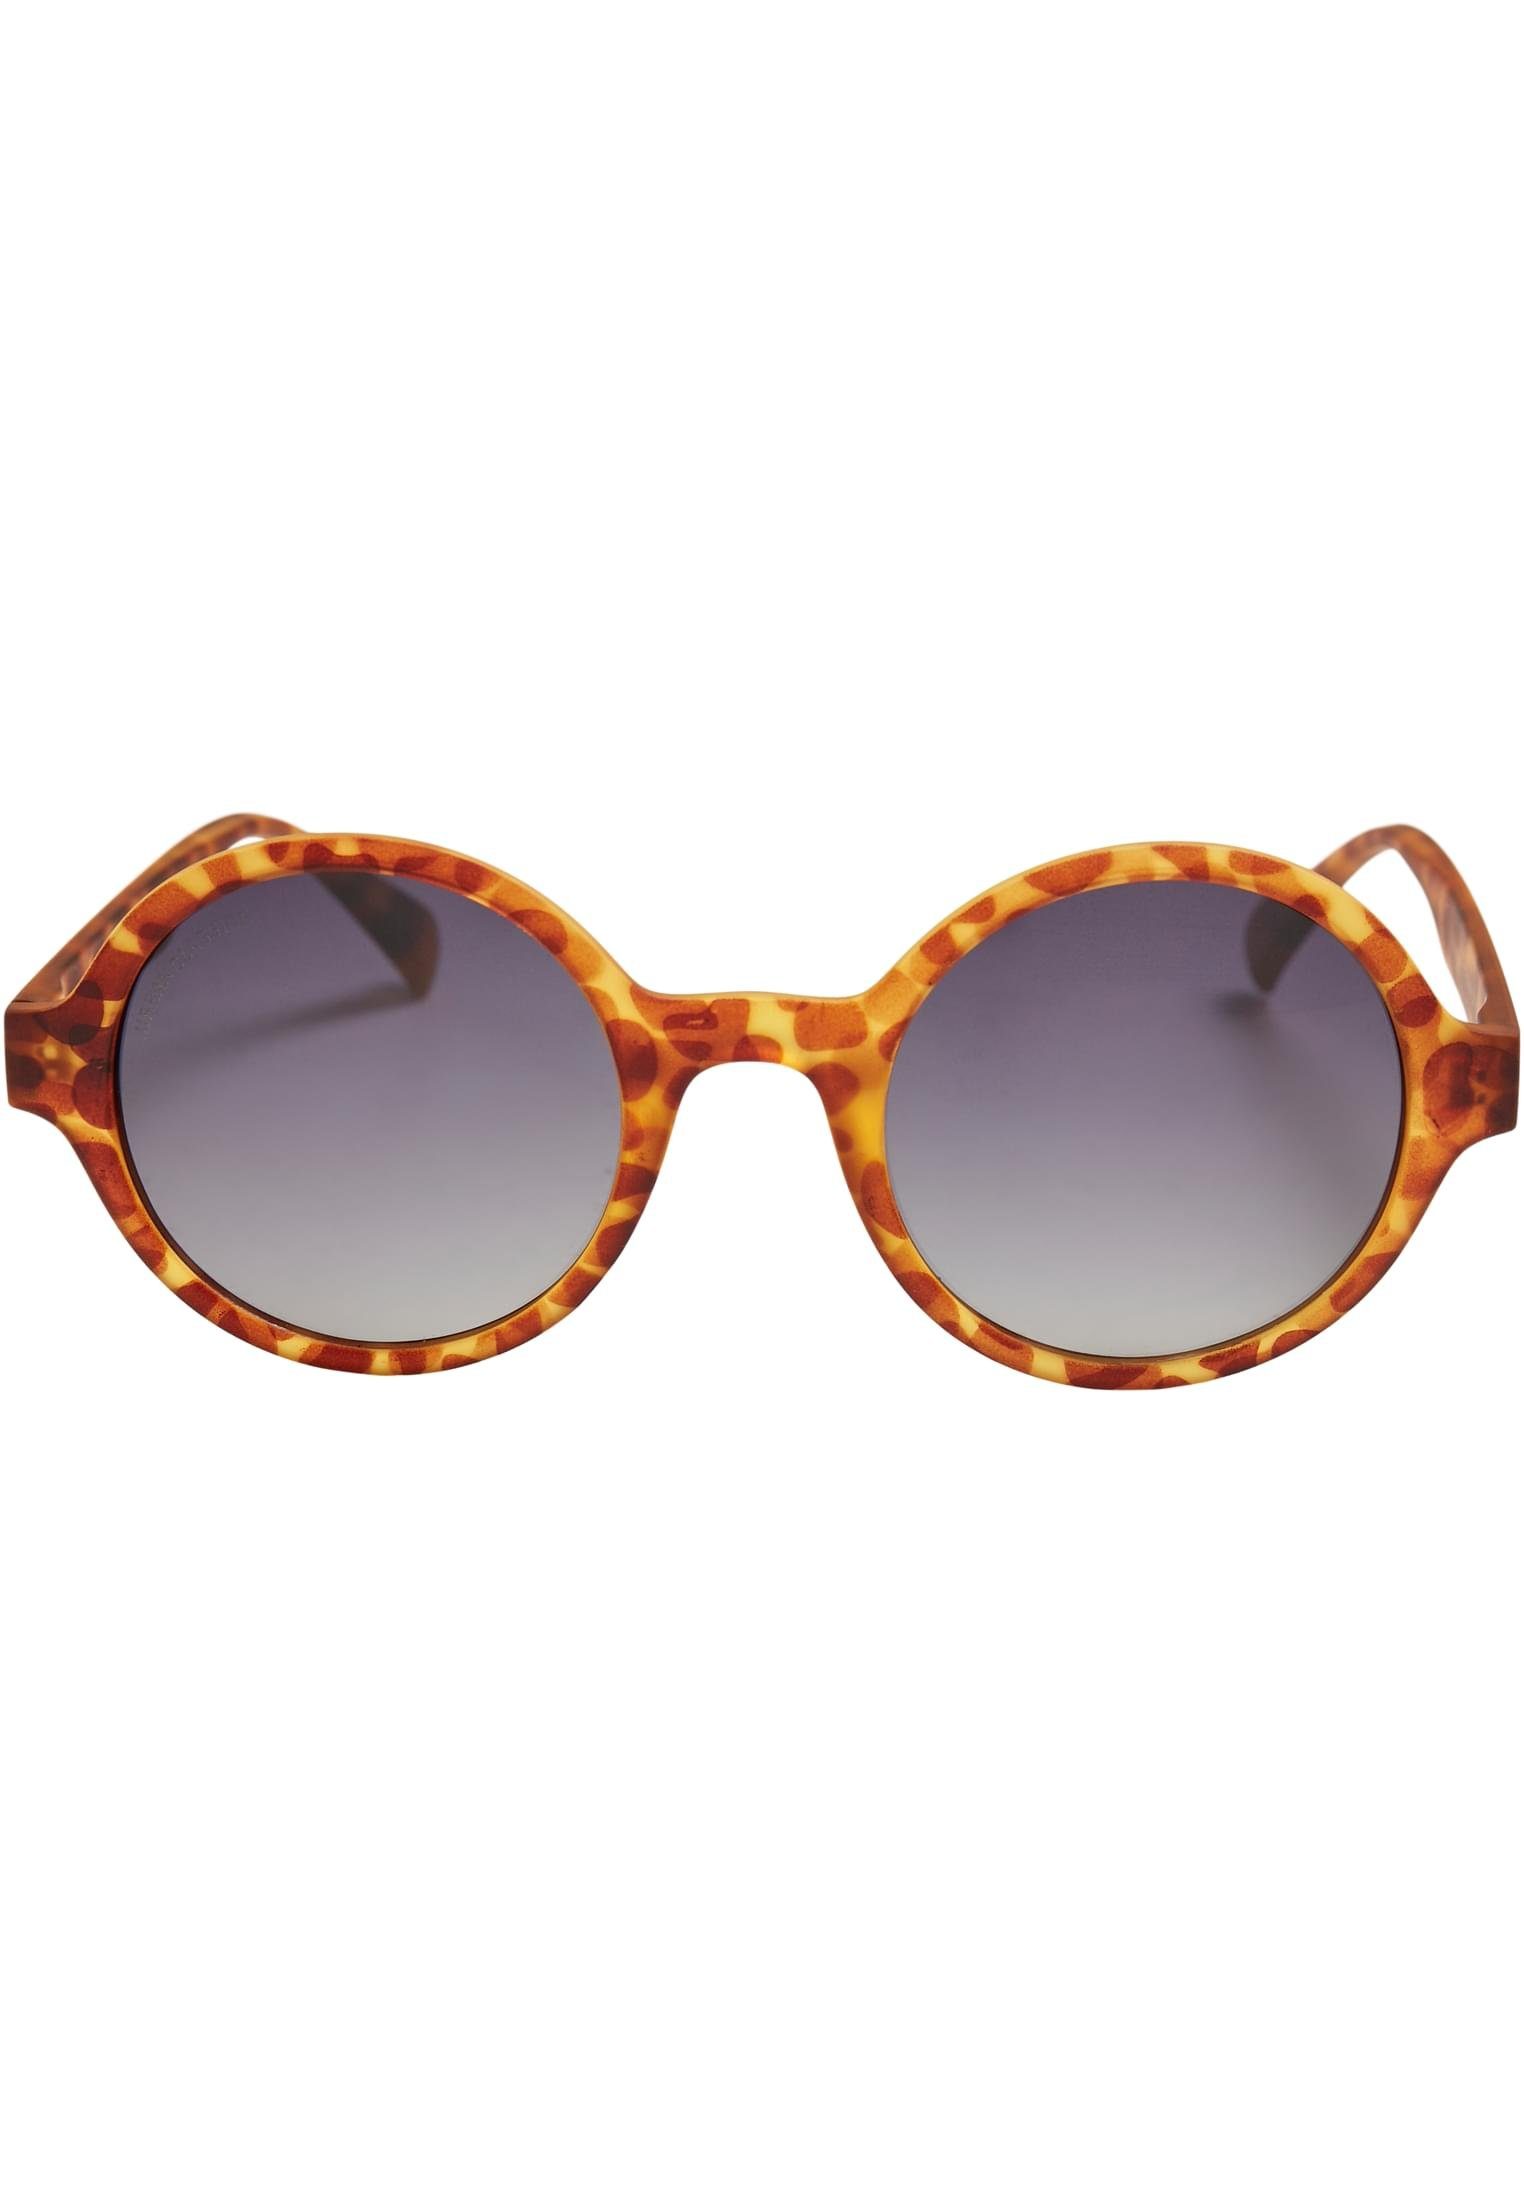 Sonnenbrille Sunglasses Accessoires UC leo/grey Retro brown URBAN Funk CLASSICS